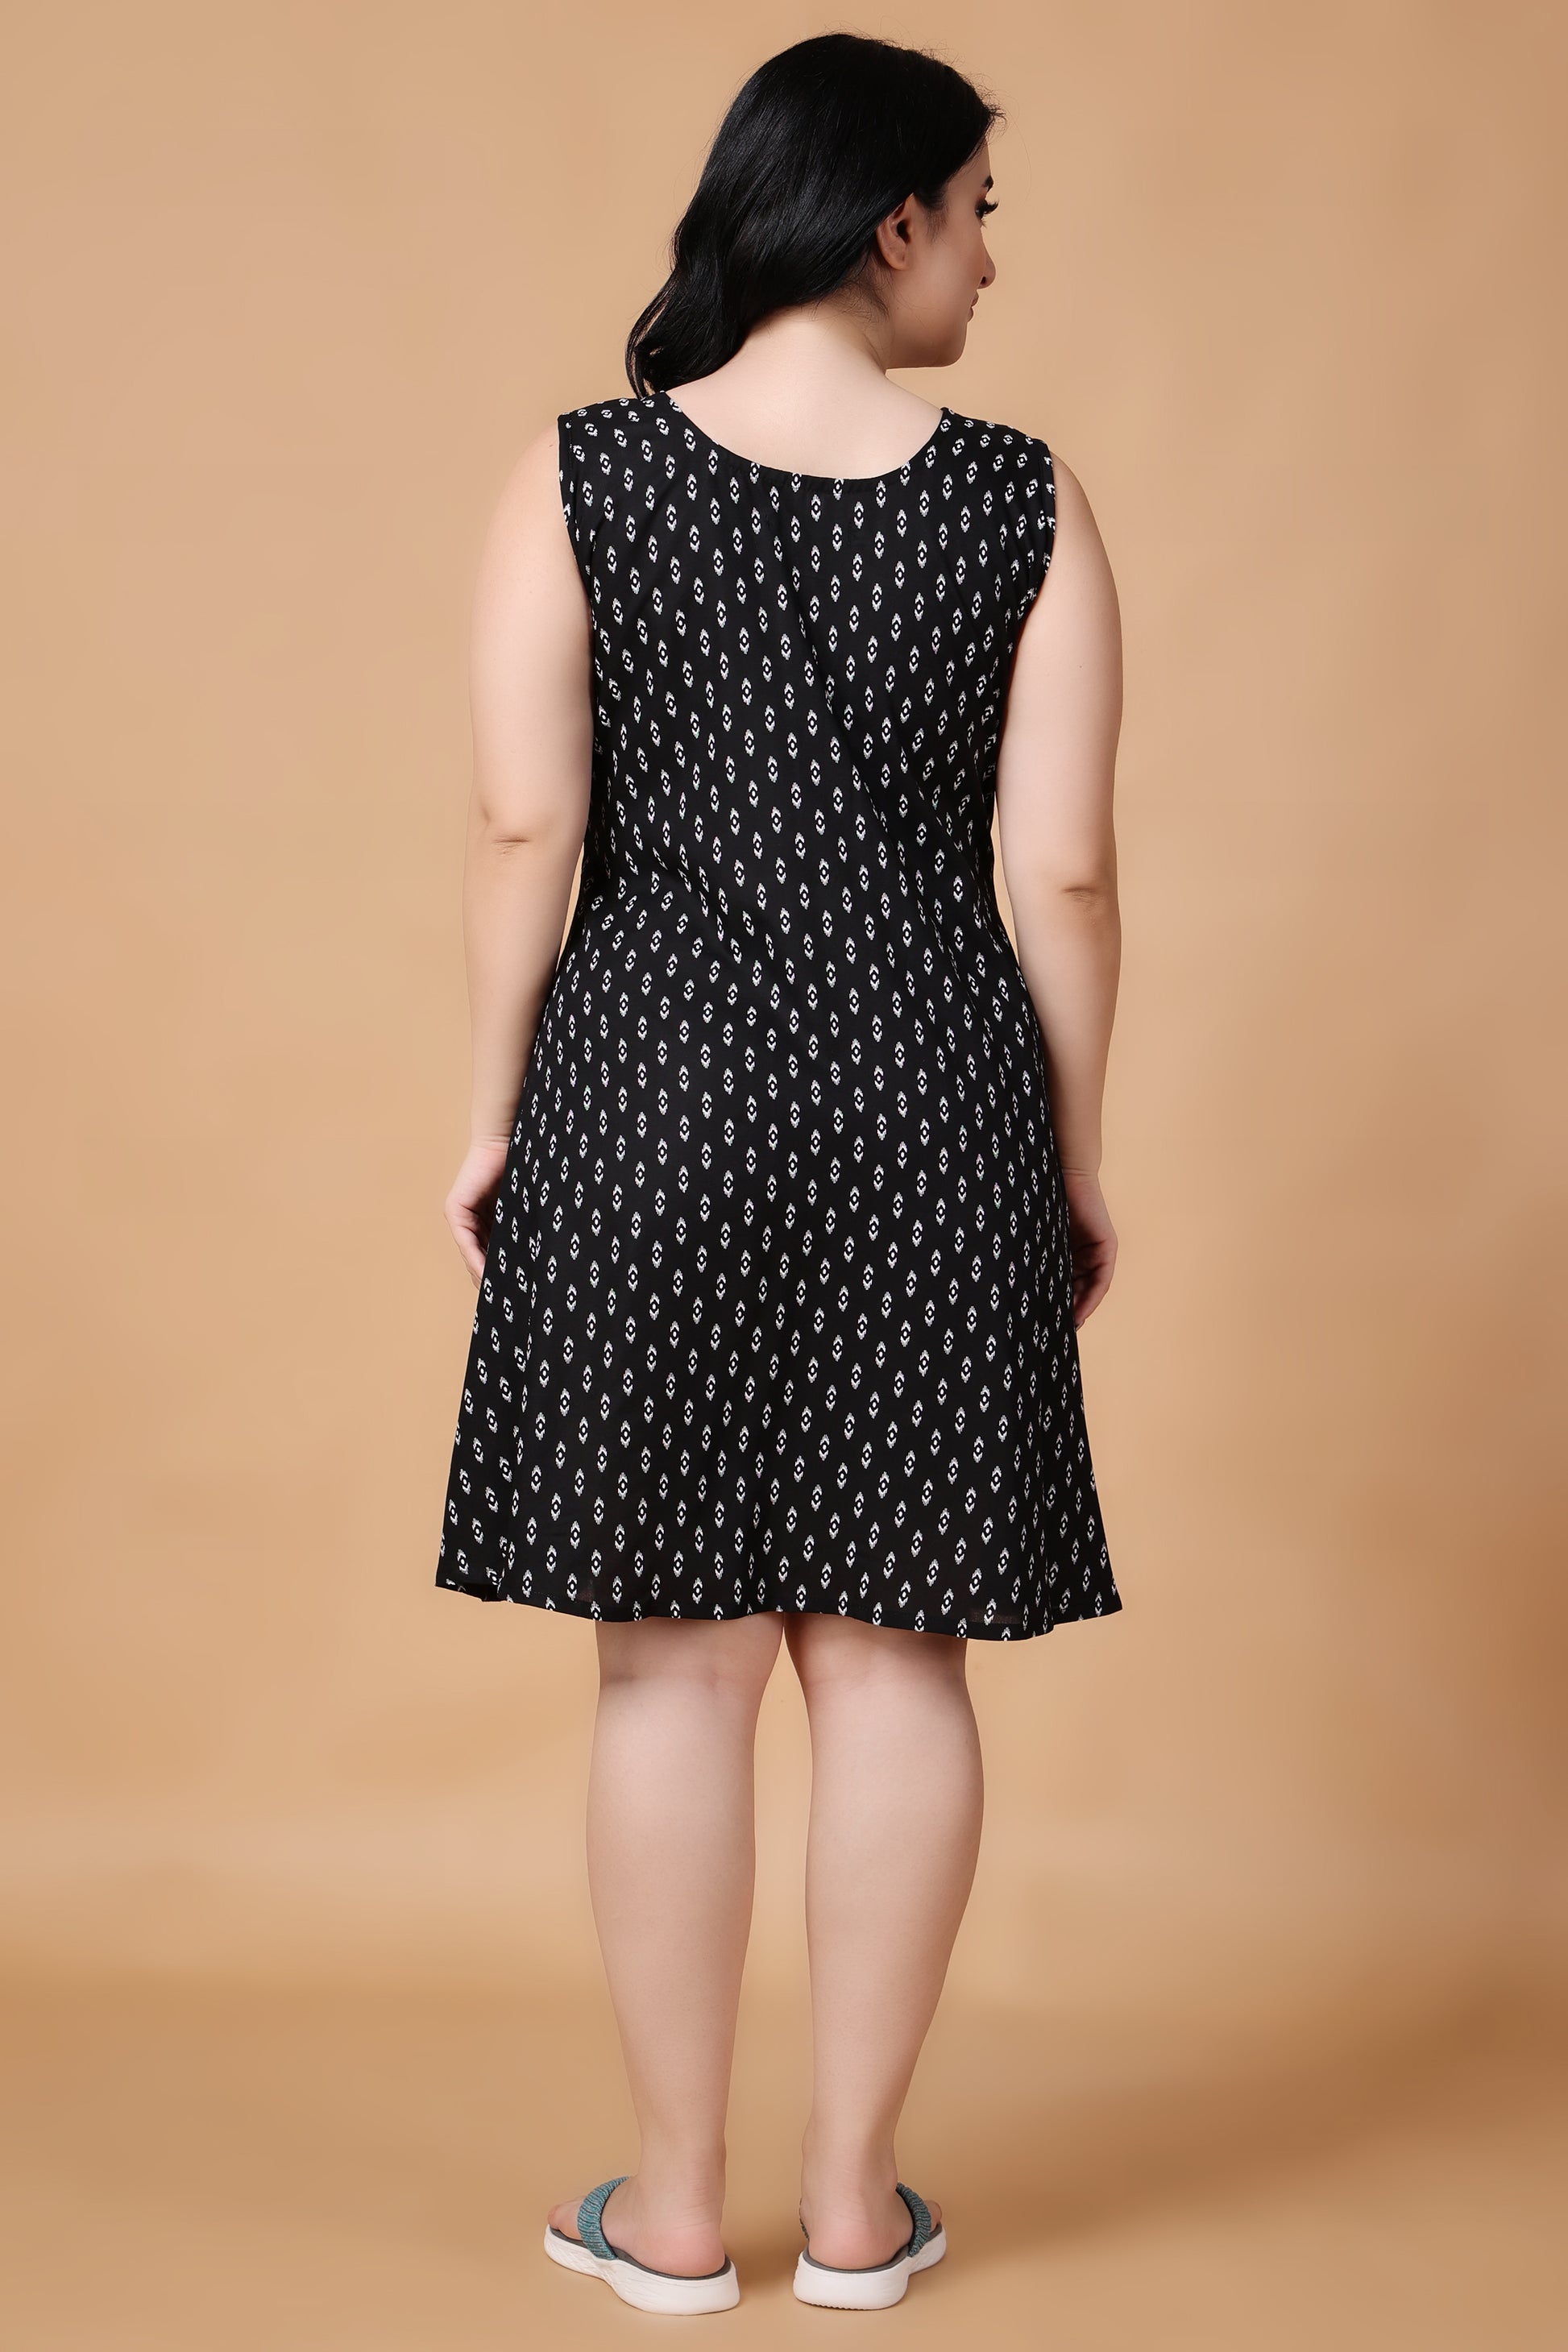 Buy Black Night Dress & Short Night Dress For Women - Apella